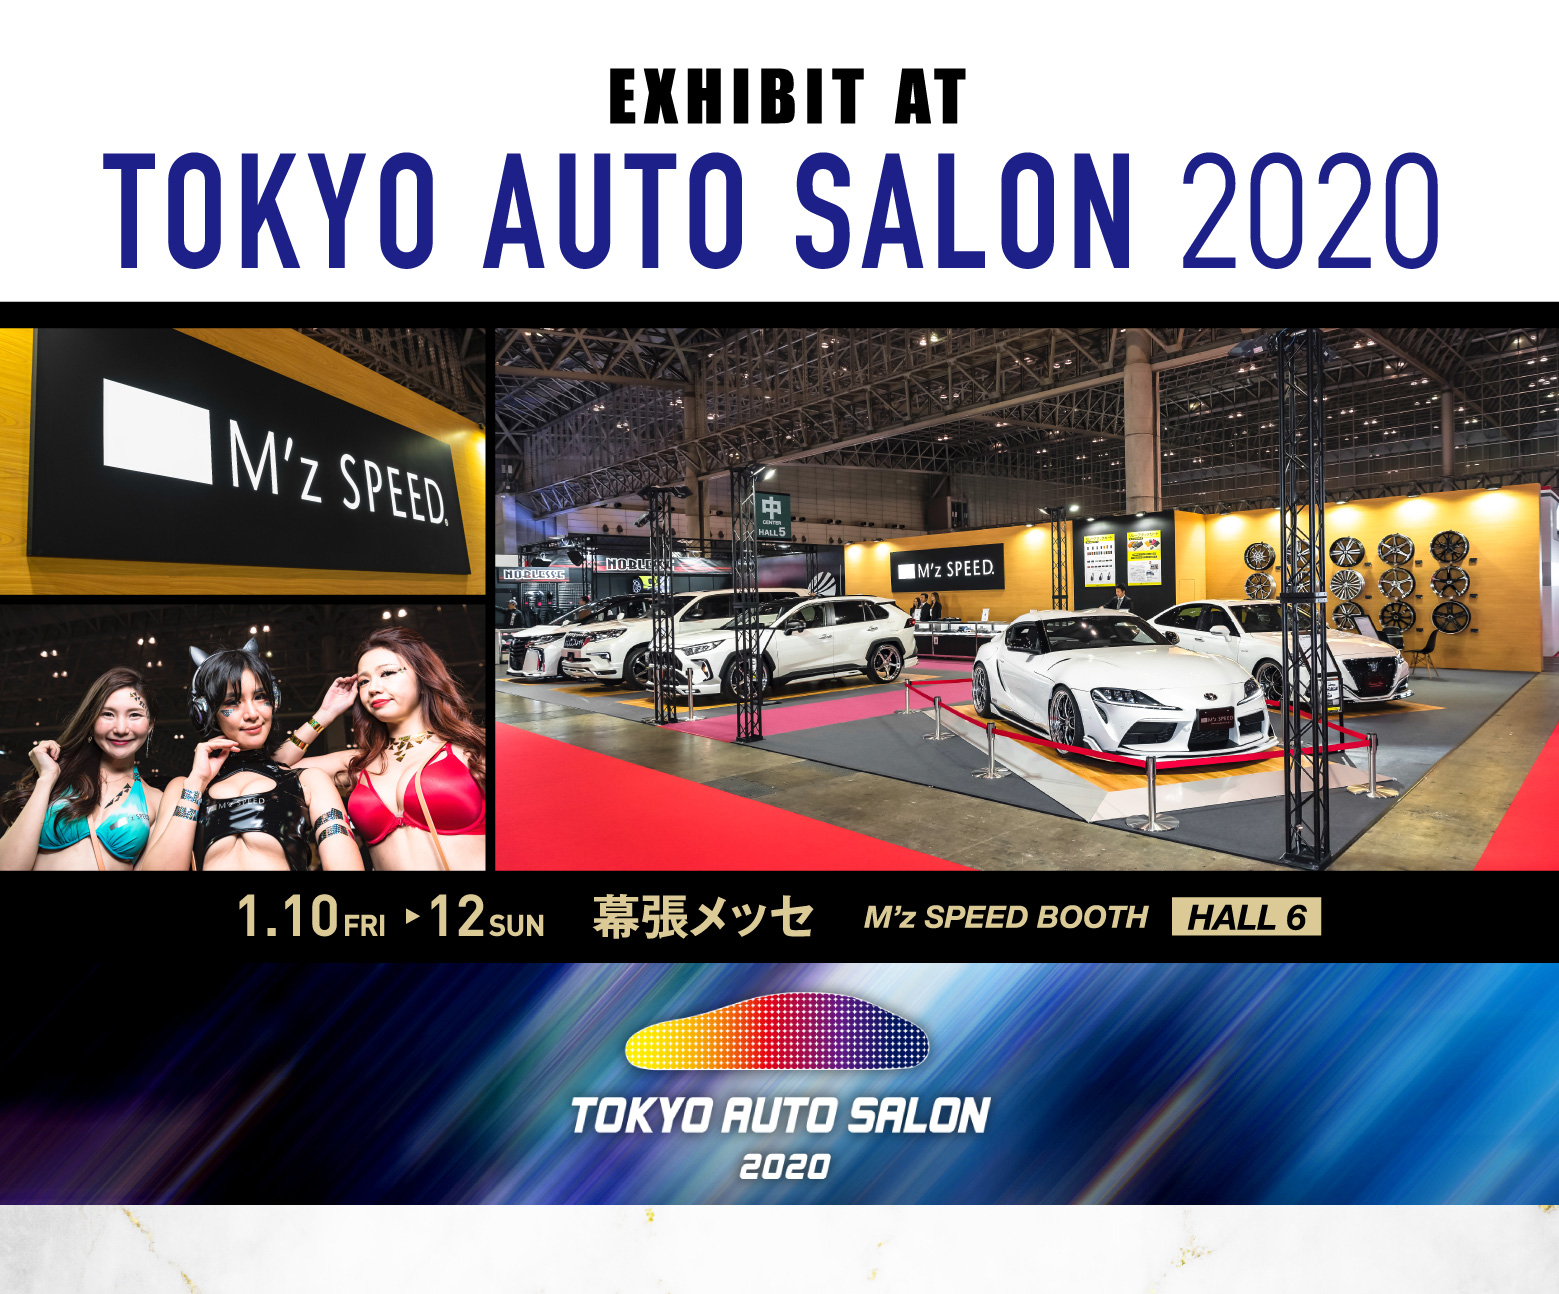 TOKYO AUTO SALON 2020 東京オートサロン2020 開催期間 2020 1.10 FRI 12 SUN ブース 幕張メッセ HALL 6